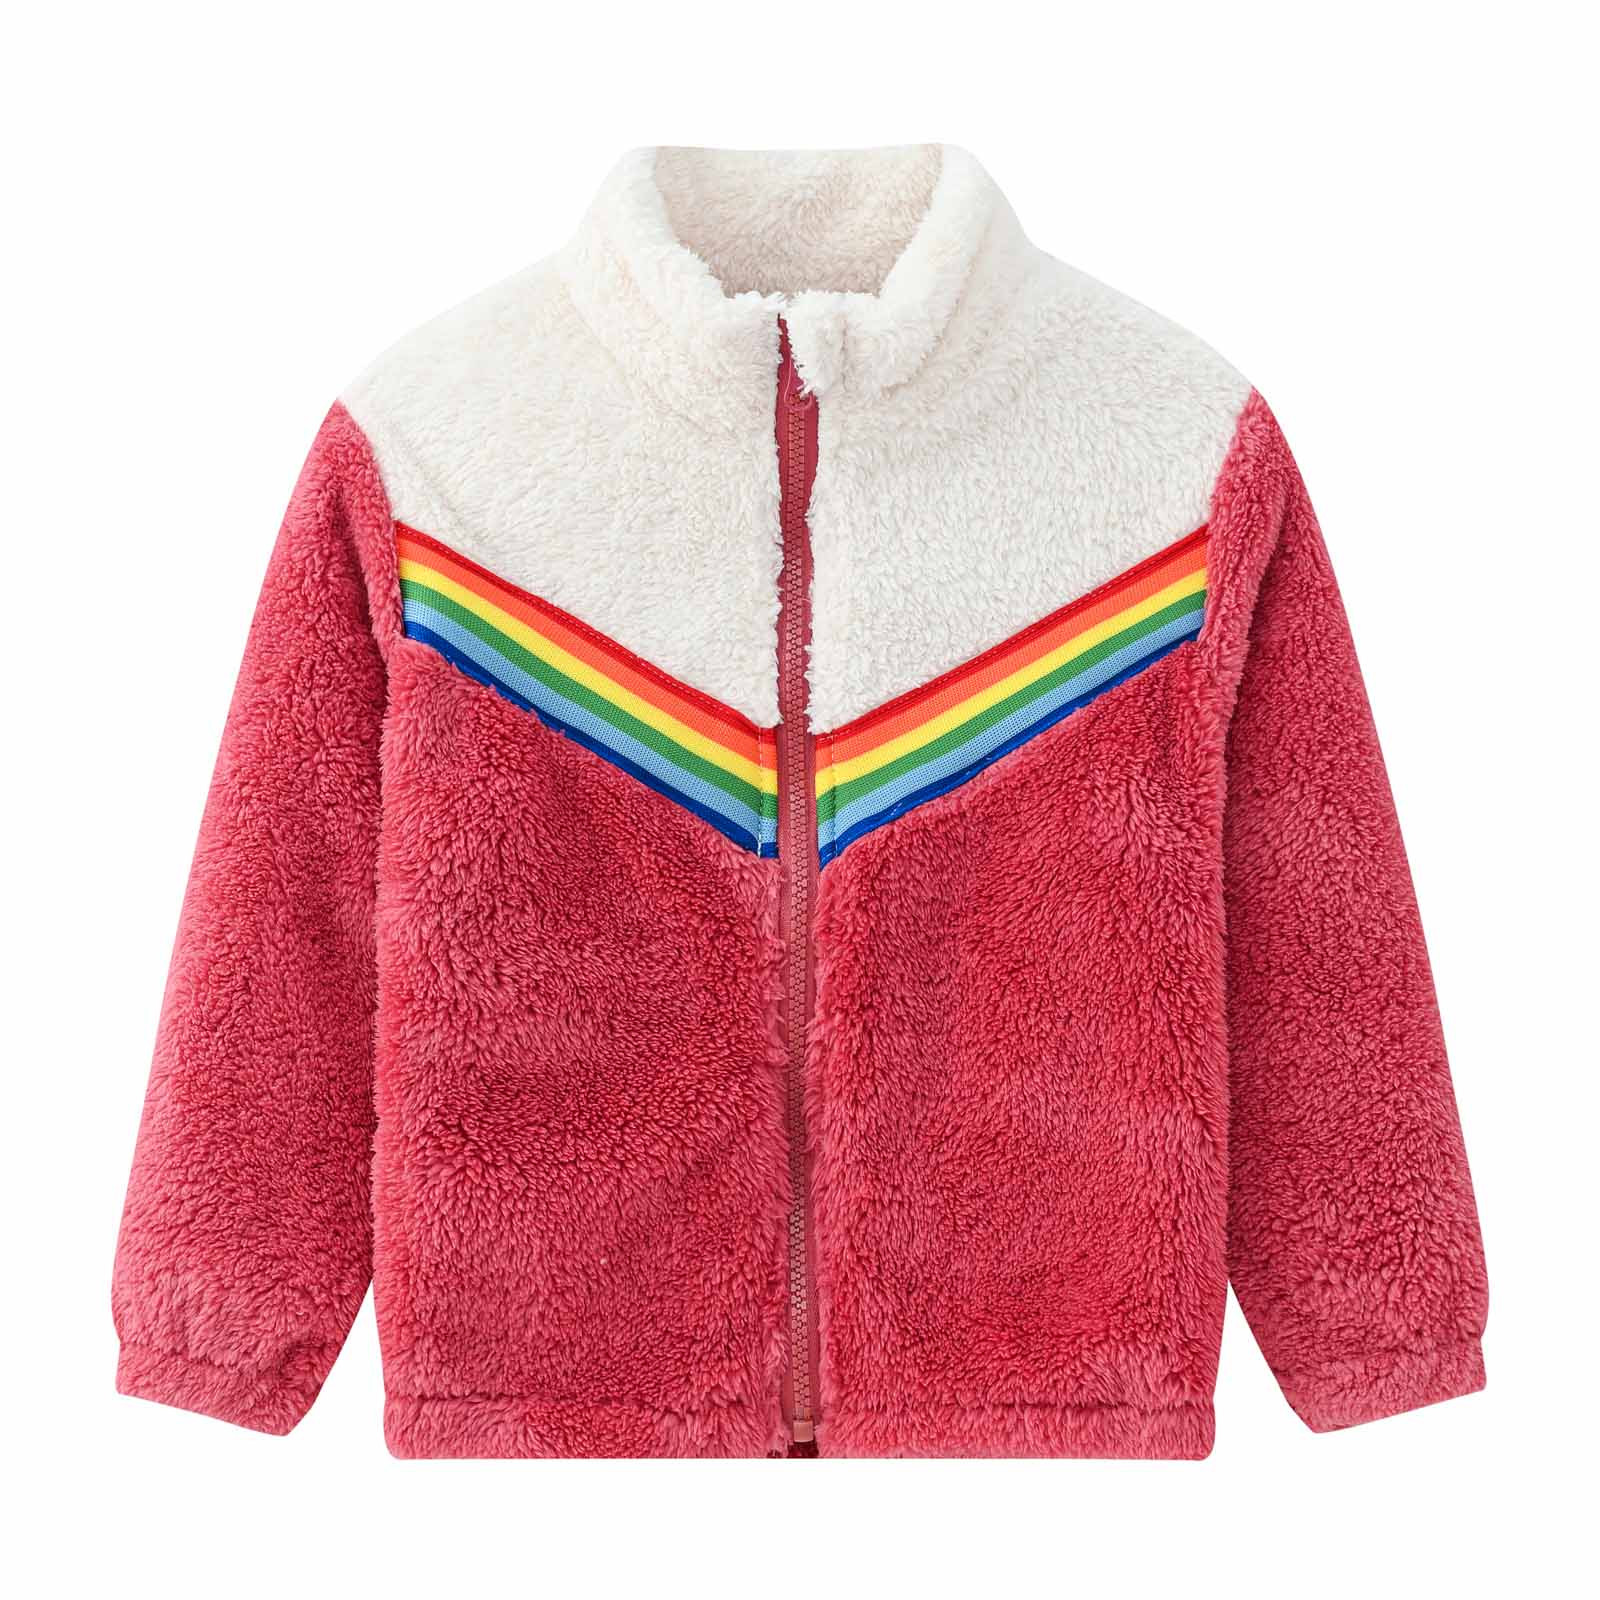 YYDGH Girls Zipper Jacket Fuzzy Sweatshirt Long Sleeve Casual Cozy Fleece Sherpa Outwear Coat Full-Zip Rainbow Jackets(Red,4-5 Years) - image 1 of 8